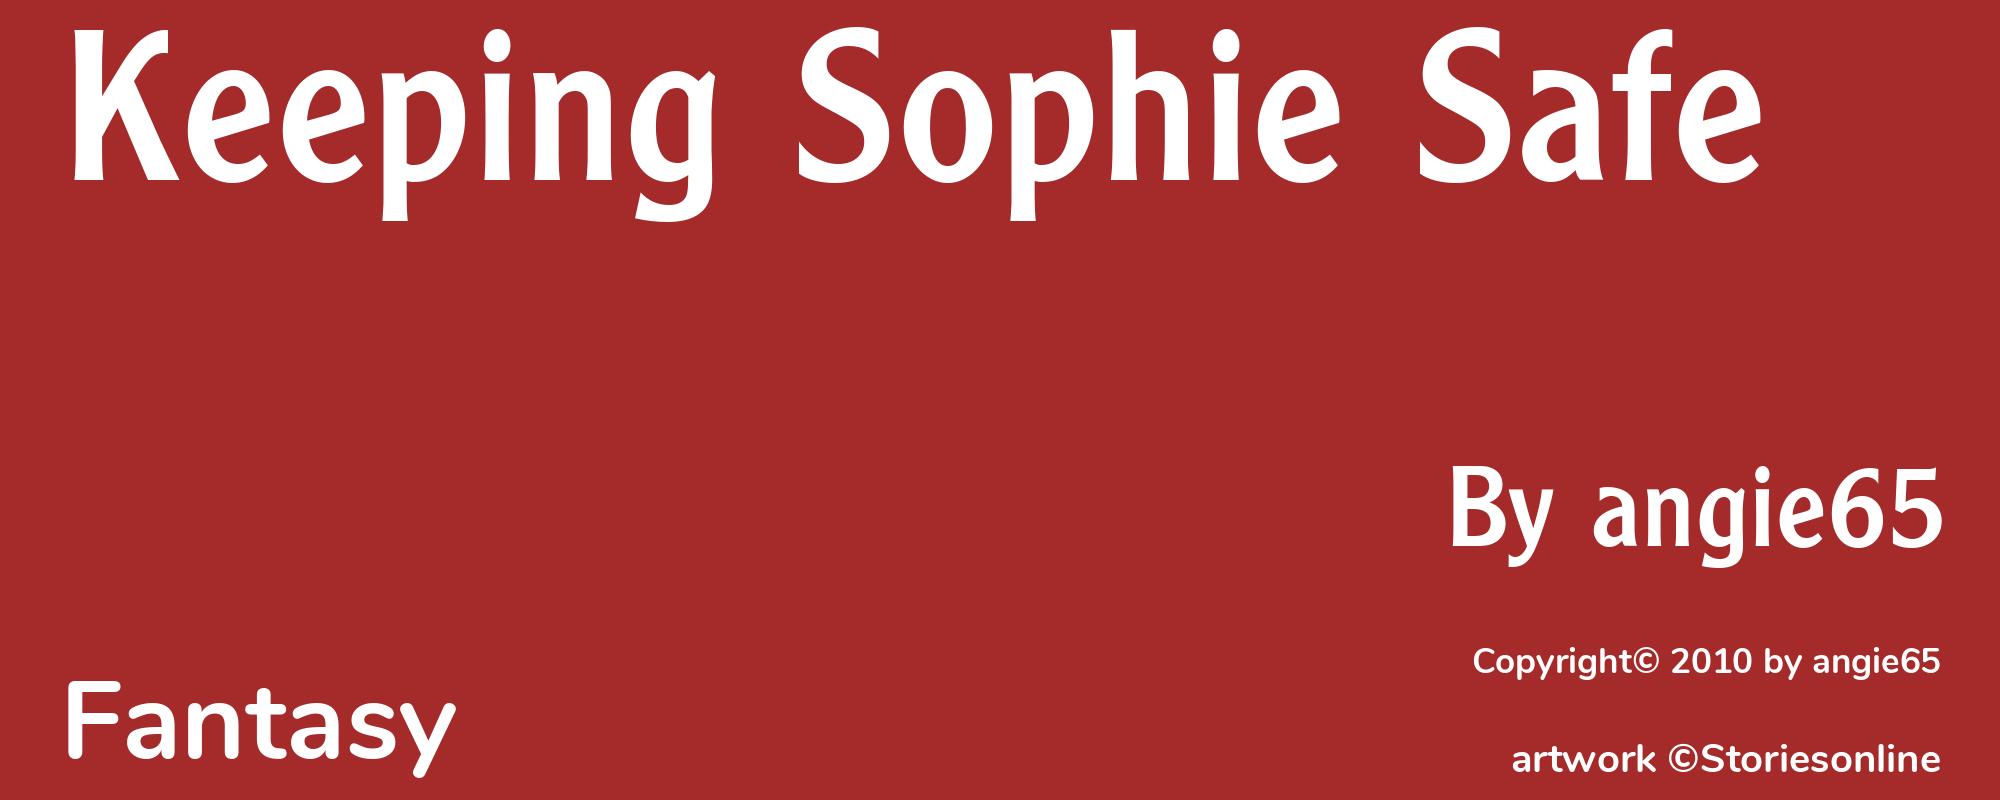 Keeping Sophie Safe - Cover